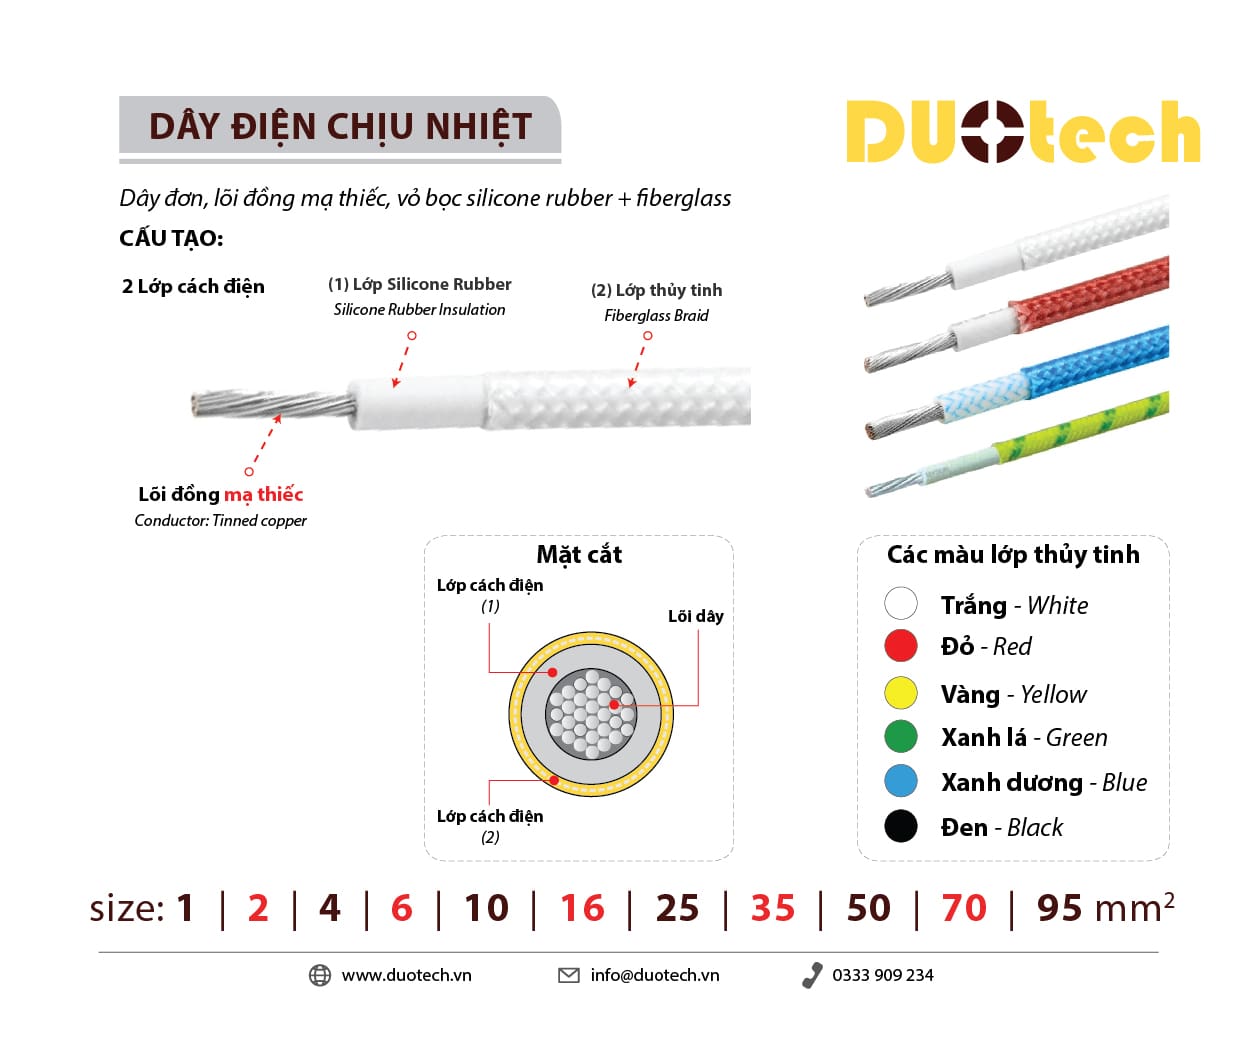 Day-dien-chiu-nhiet-do-cao-silicone-rubber-fiber-glass